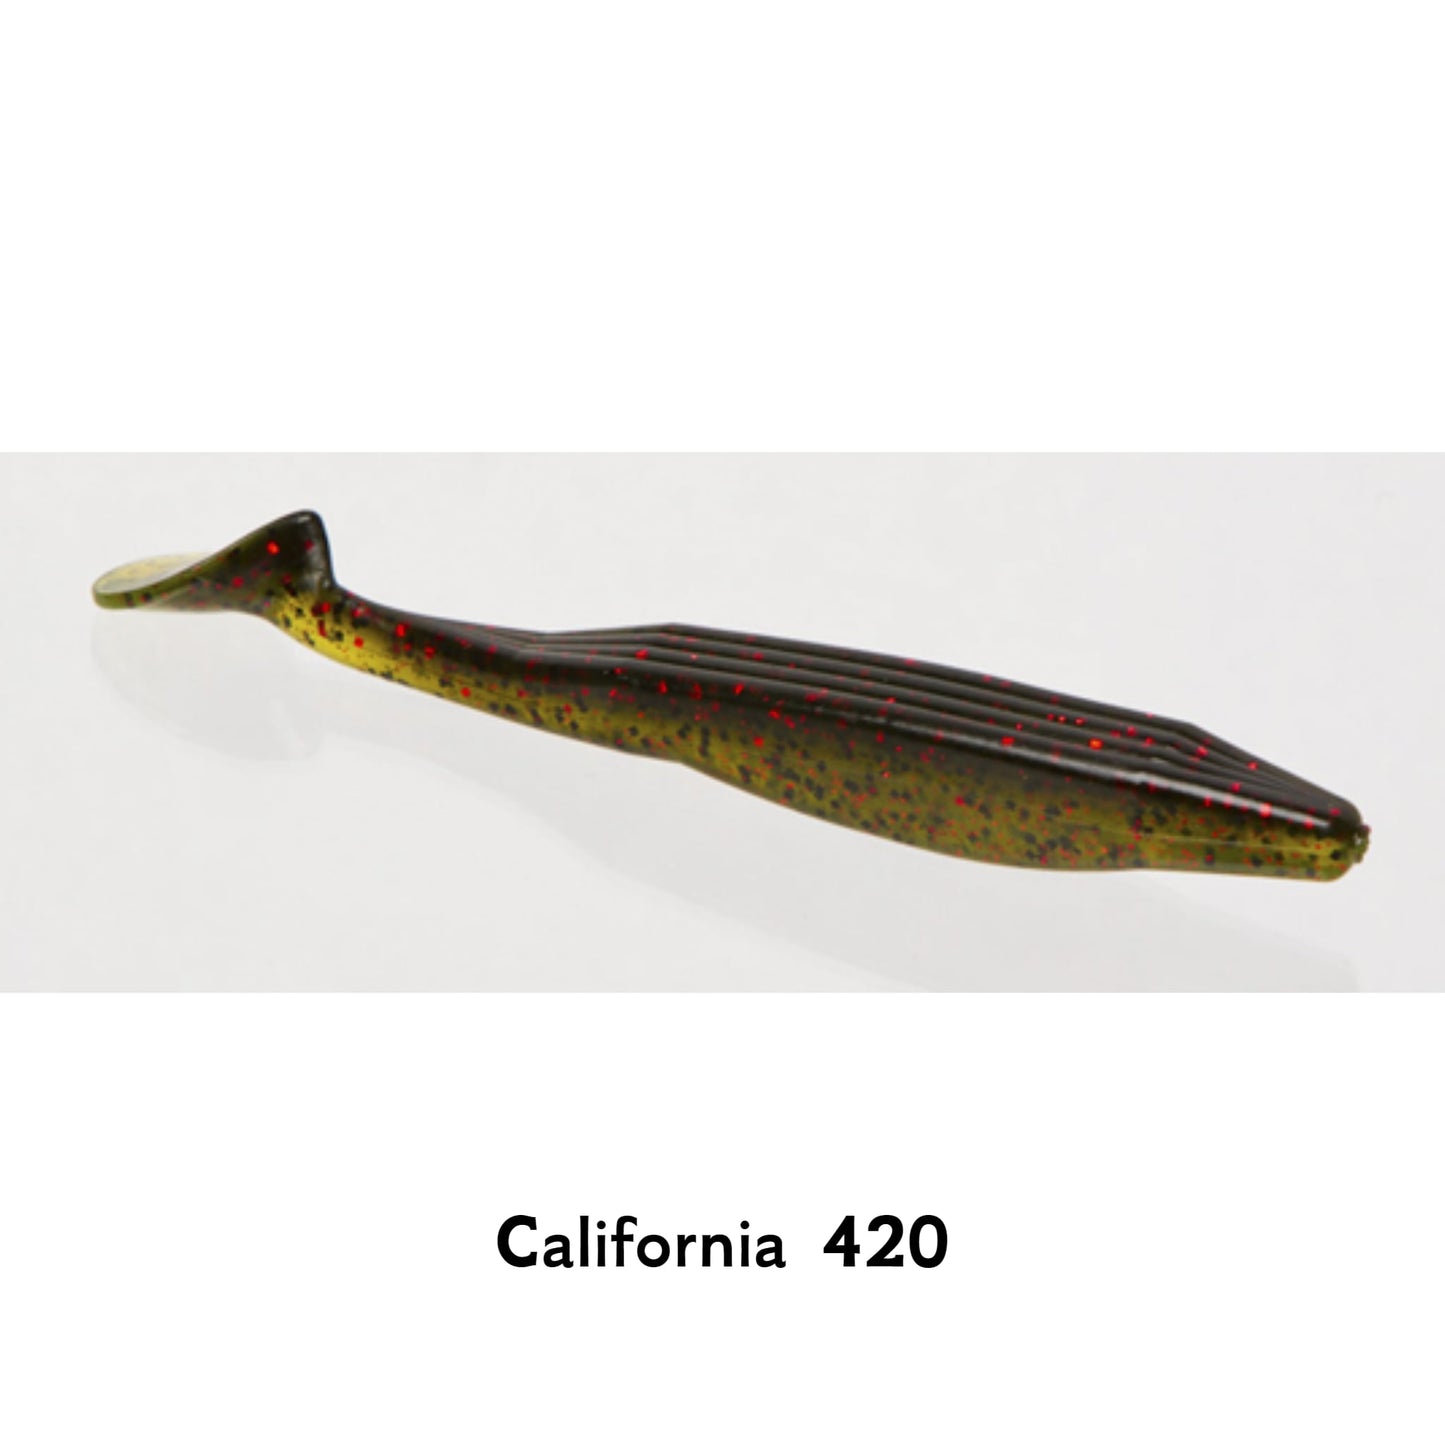 Zoom Swimmin Super Fluke California 420 4 Inch 5pcs Soft Bait Fishing Lure ALL COLOURS Paddle Tail Jig Dropshot Lure Texas Carolina Rig Cheb